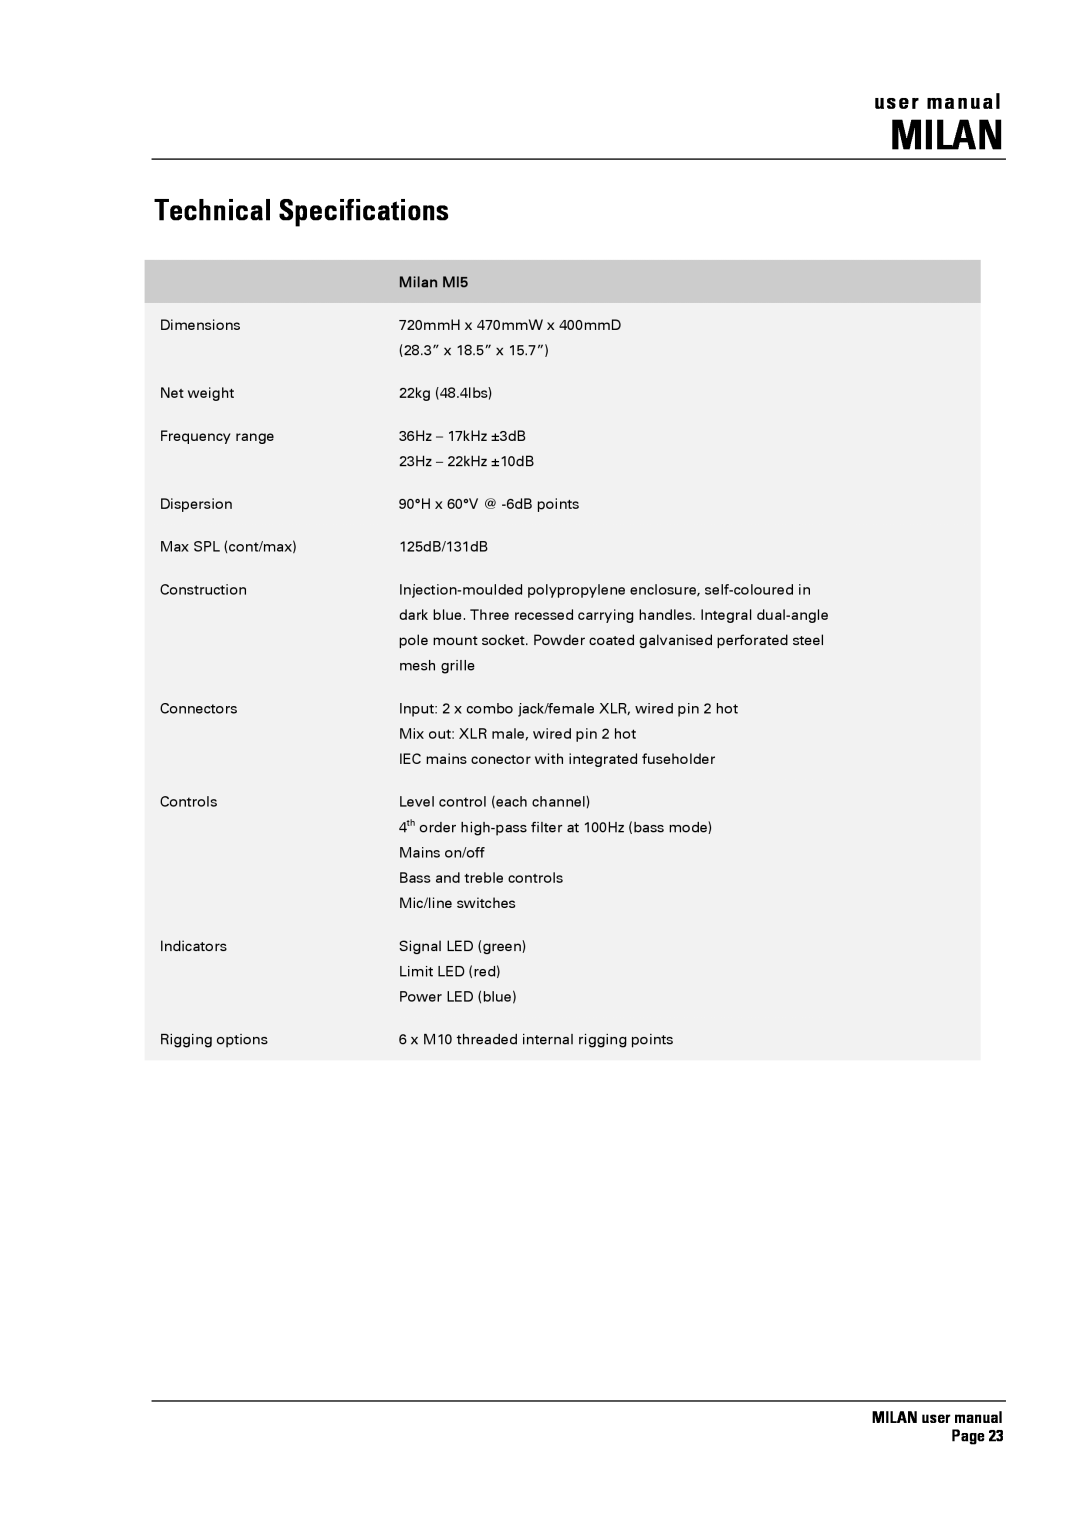 Turbosound Technical Specifications, Milan MI5, user manual 